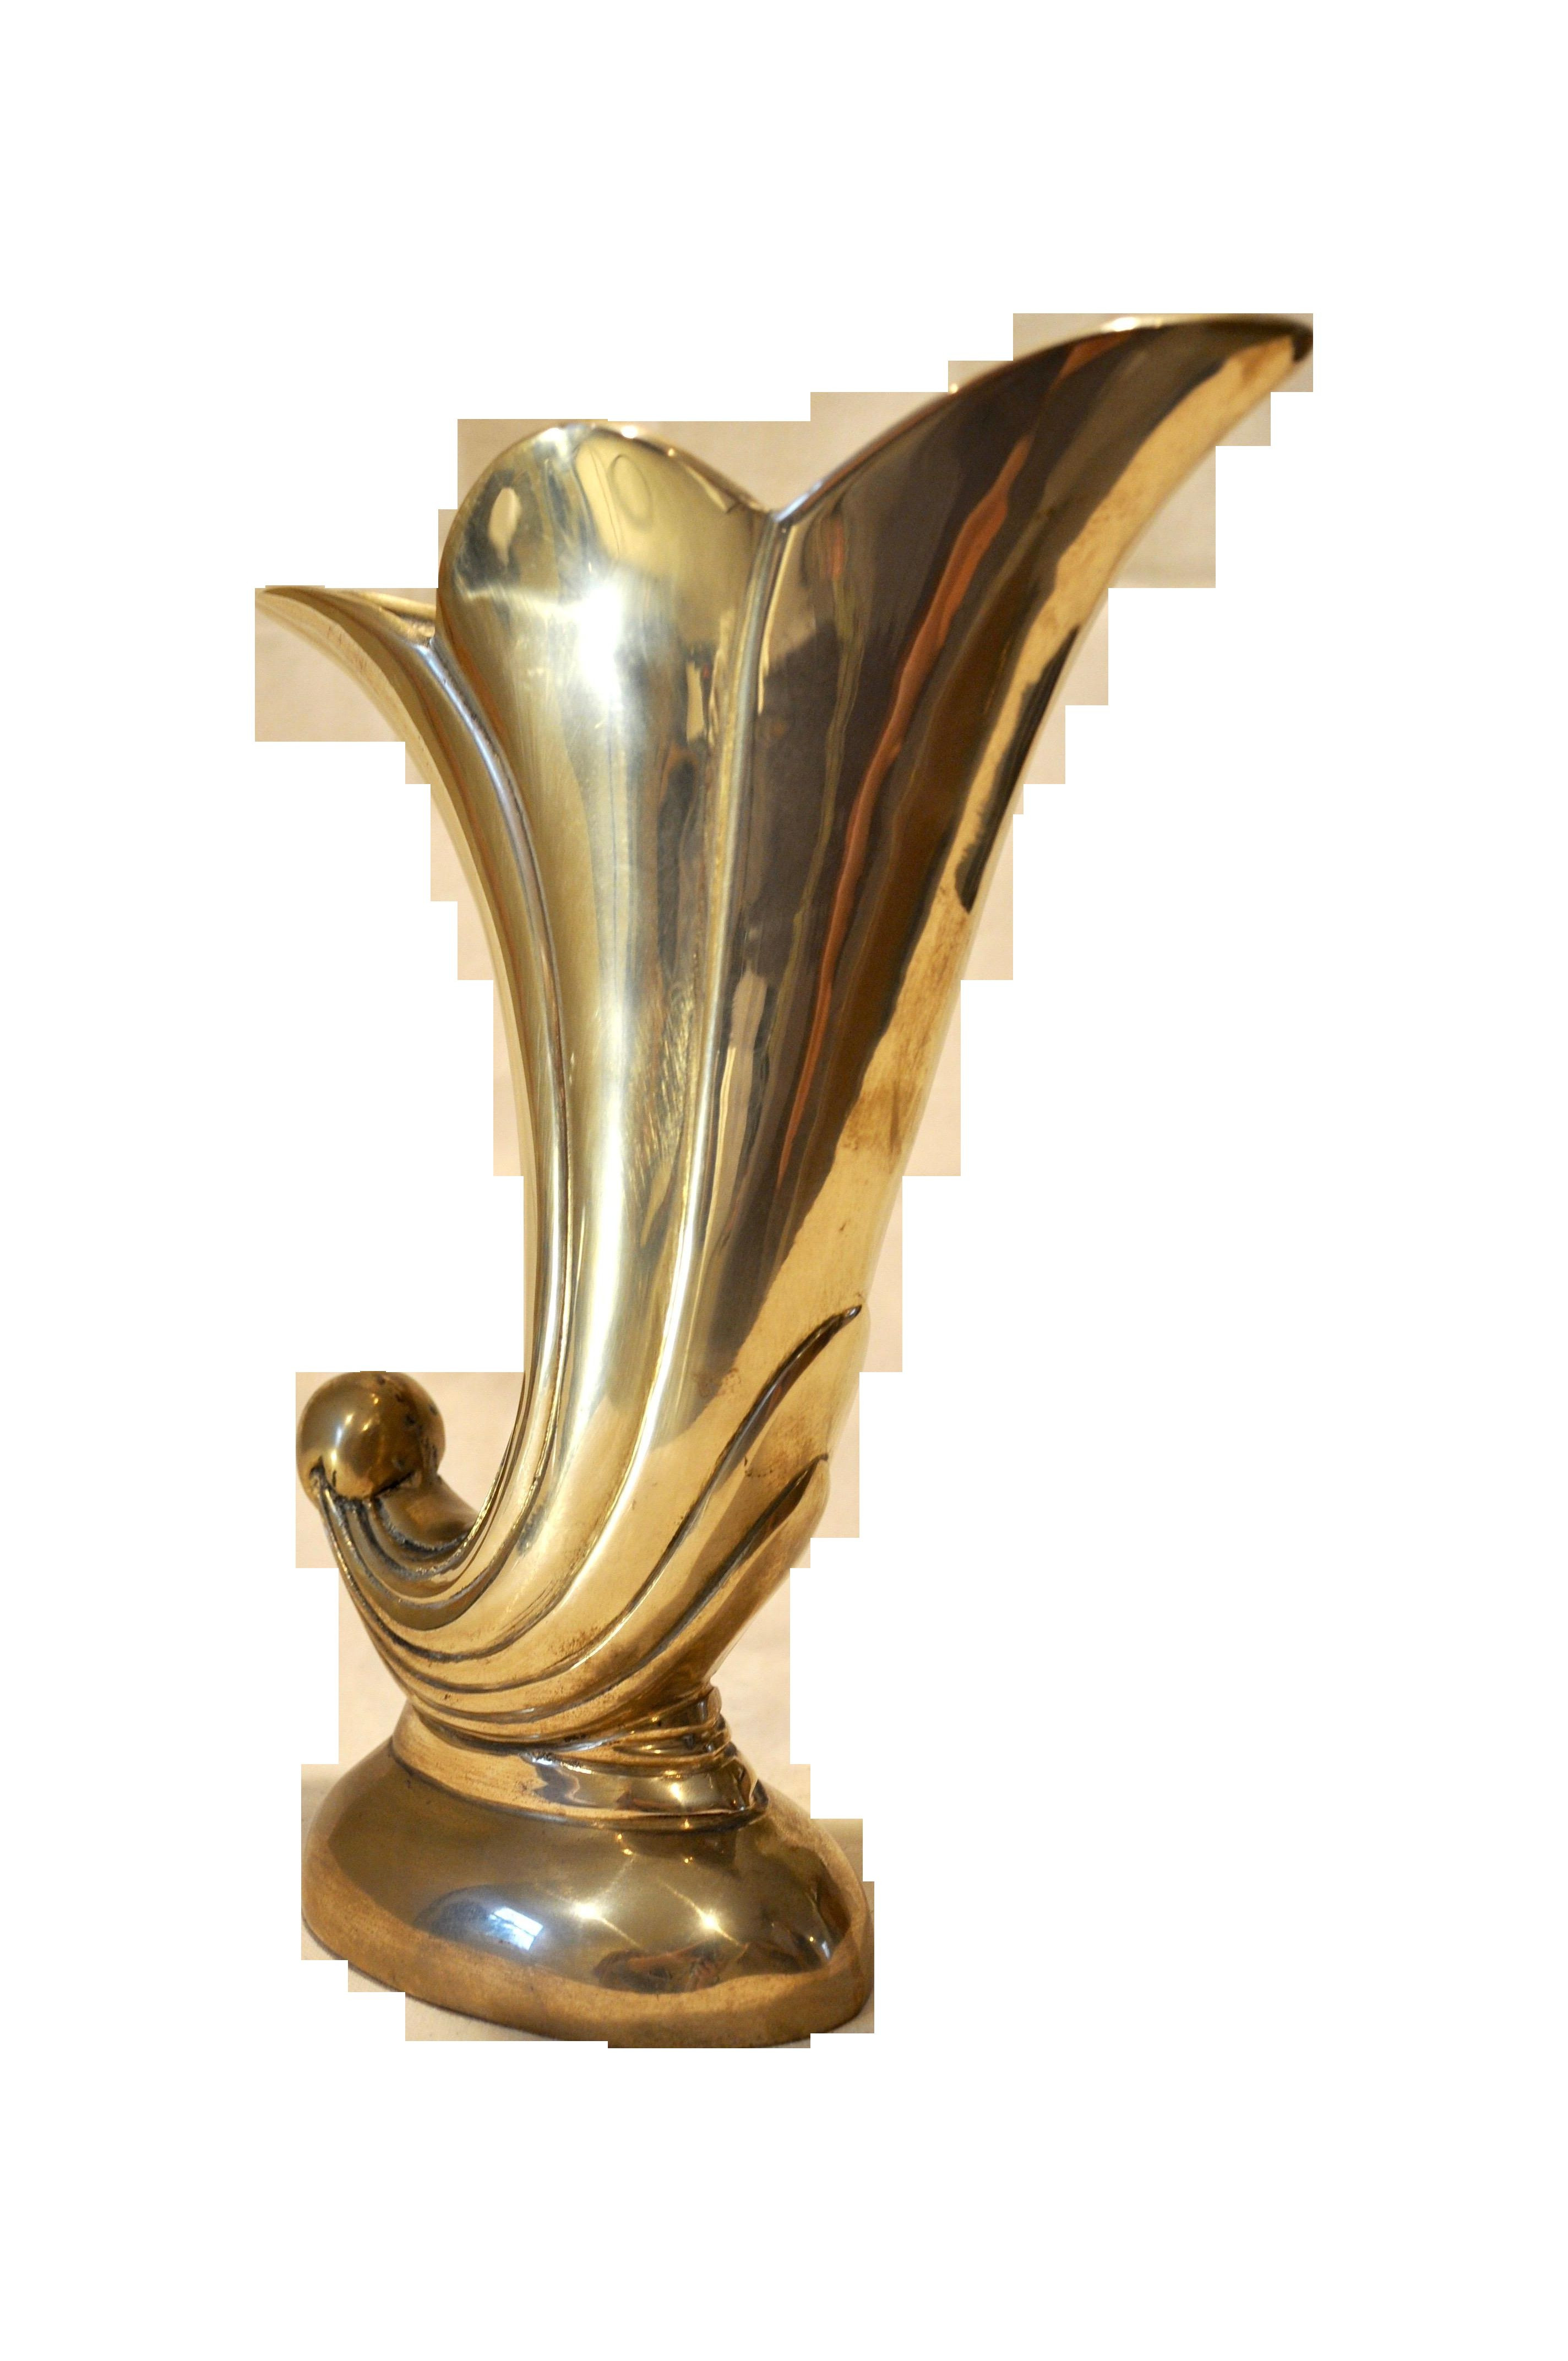 20 Cute Antique Brass Vase Made In India 2023 free download antique brass vase made in india of 49 antique brass vase the weekly world inside vintage brass tulip vase